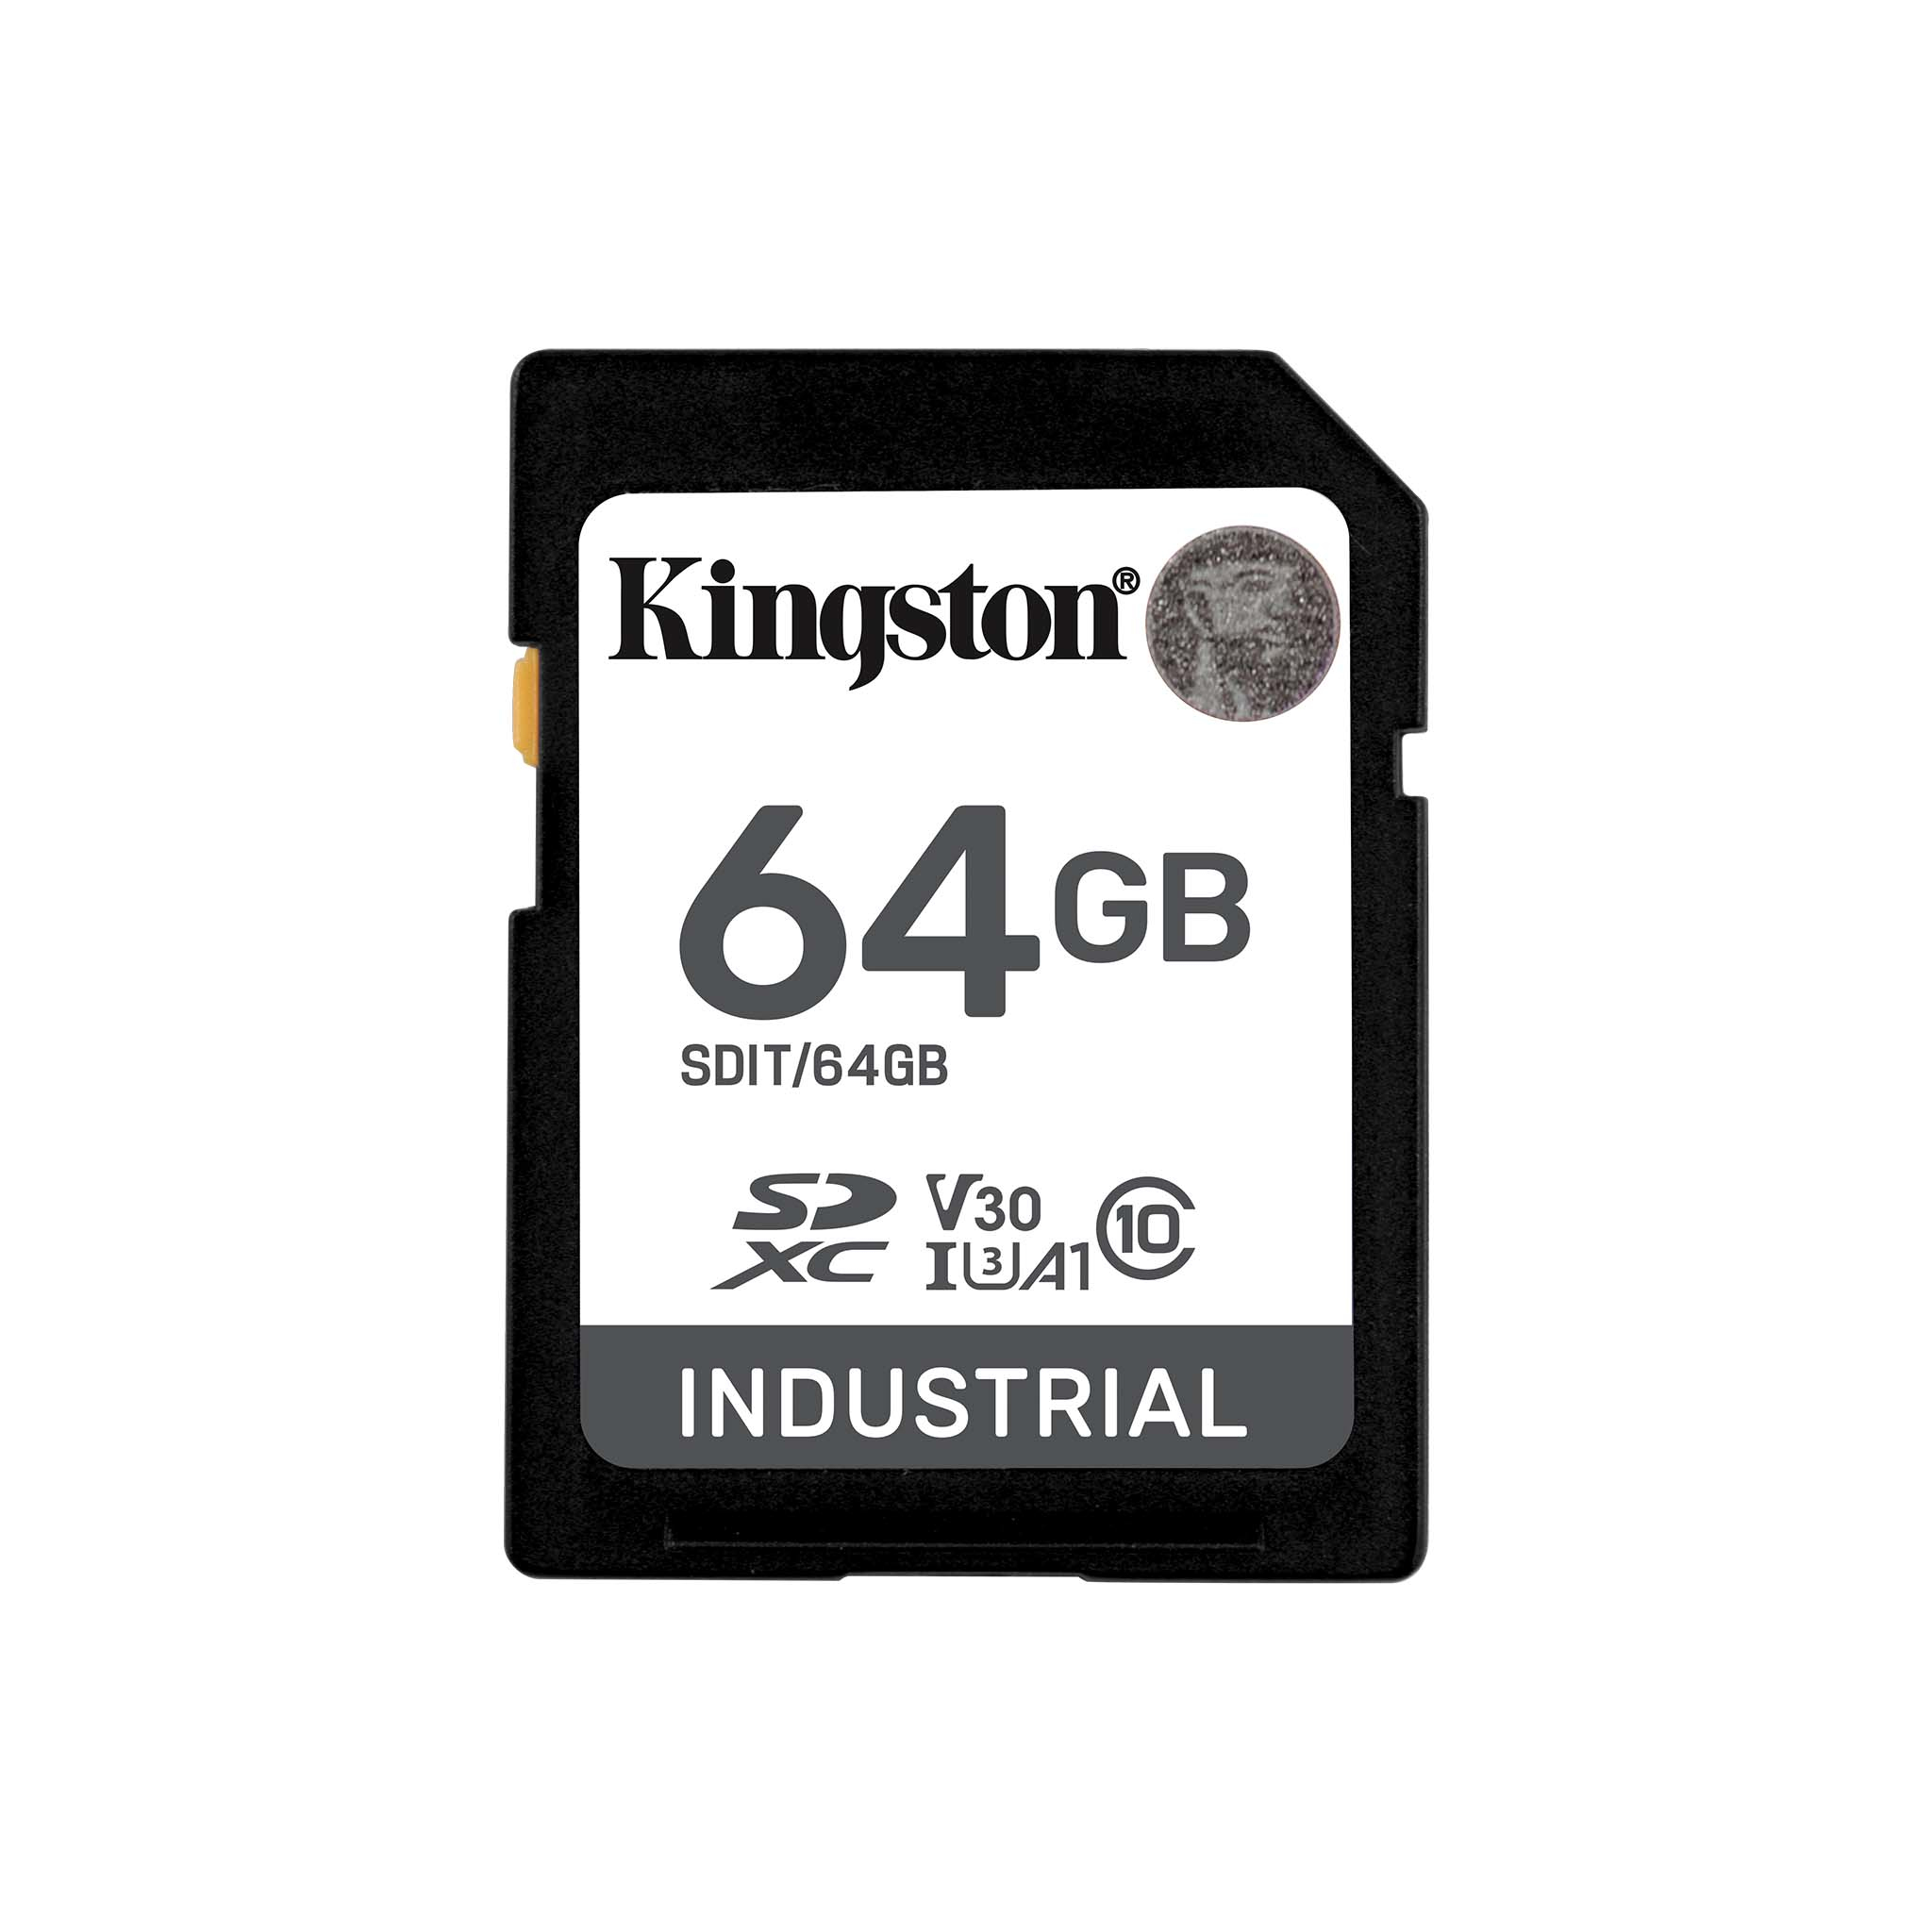 Kingston Technology SDIT/64GB